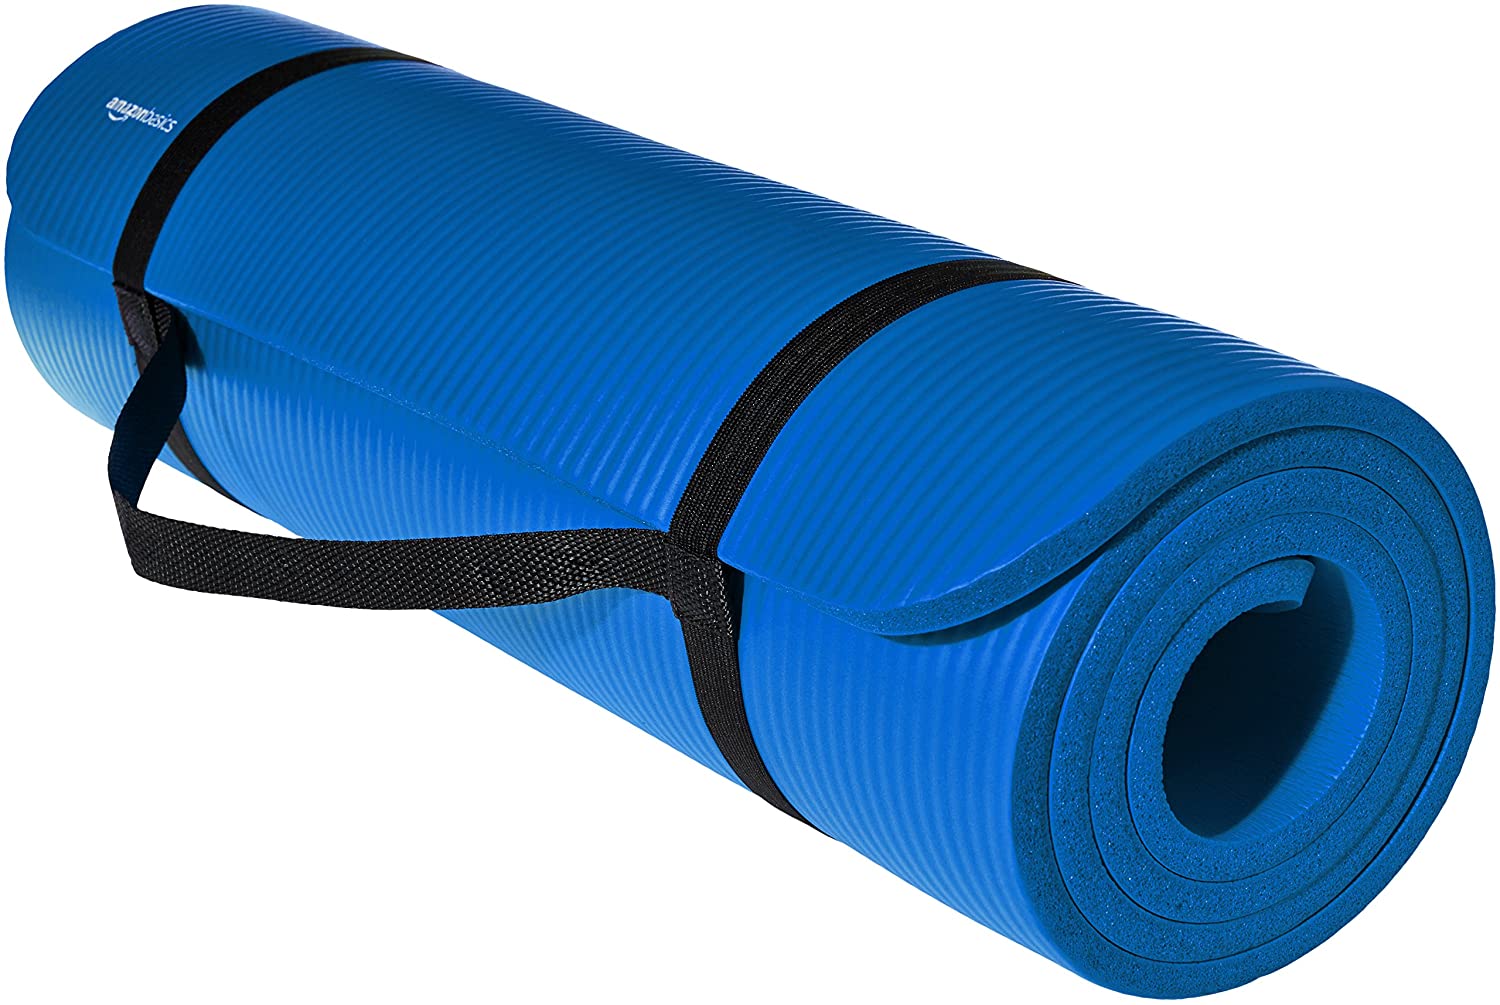 AmazonBasics 13mm Extra Thick Yoga and Exercise Mat